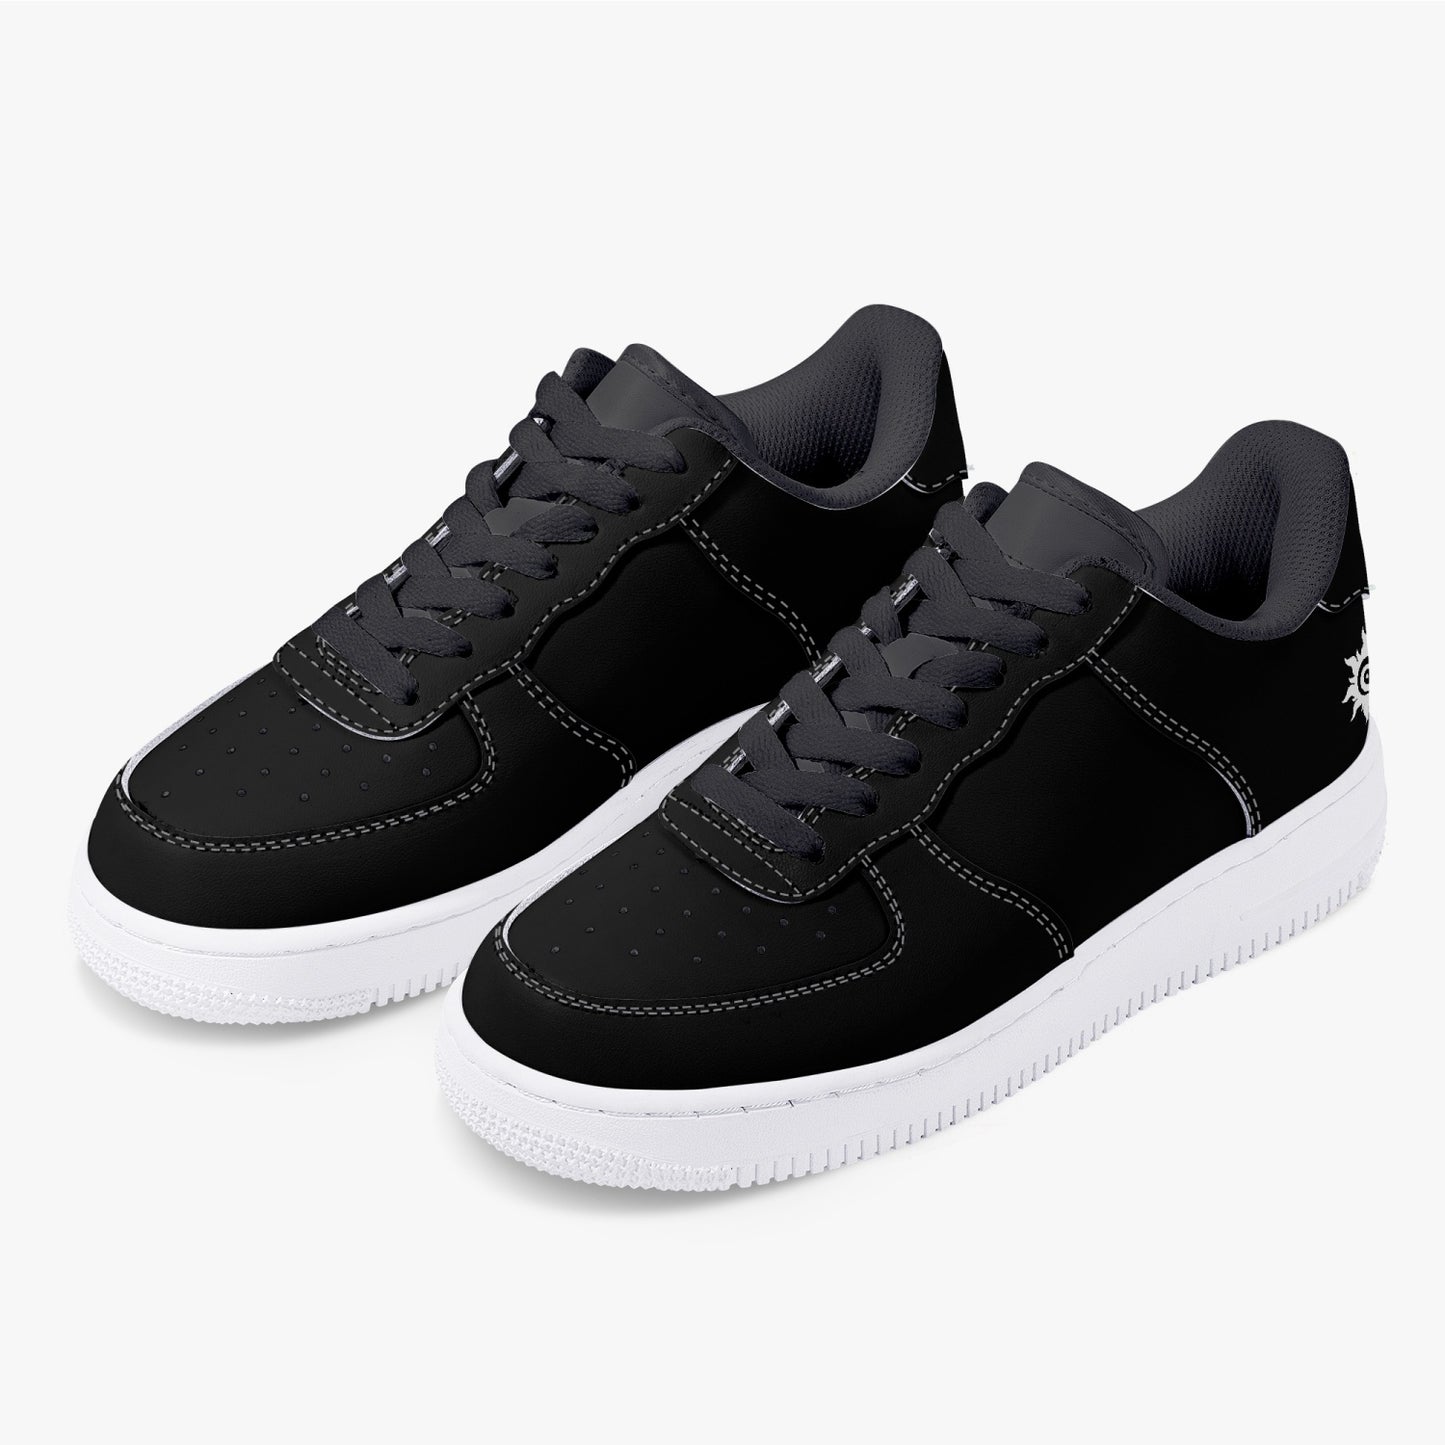 Unisex Leather sneakers shoes - ActSun Black